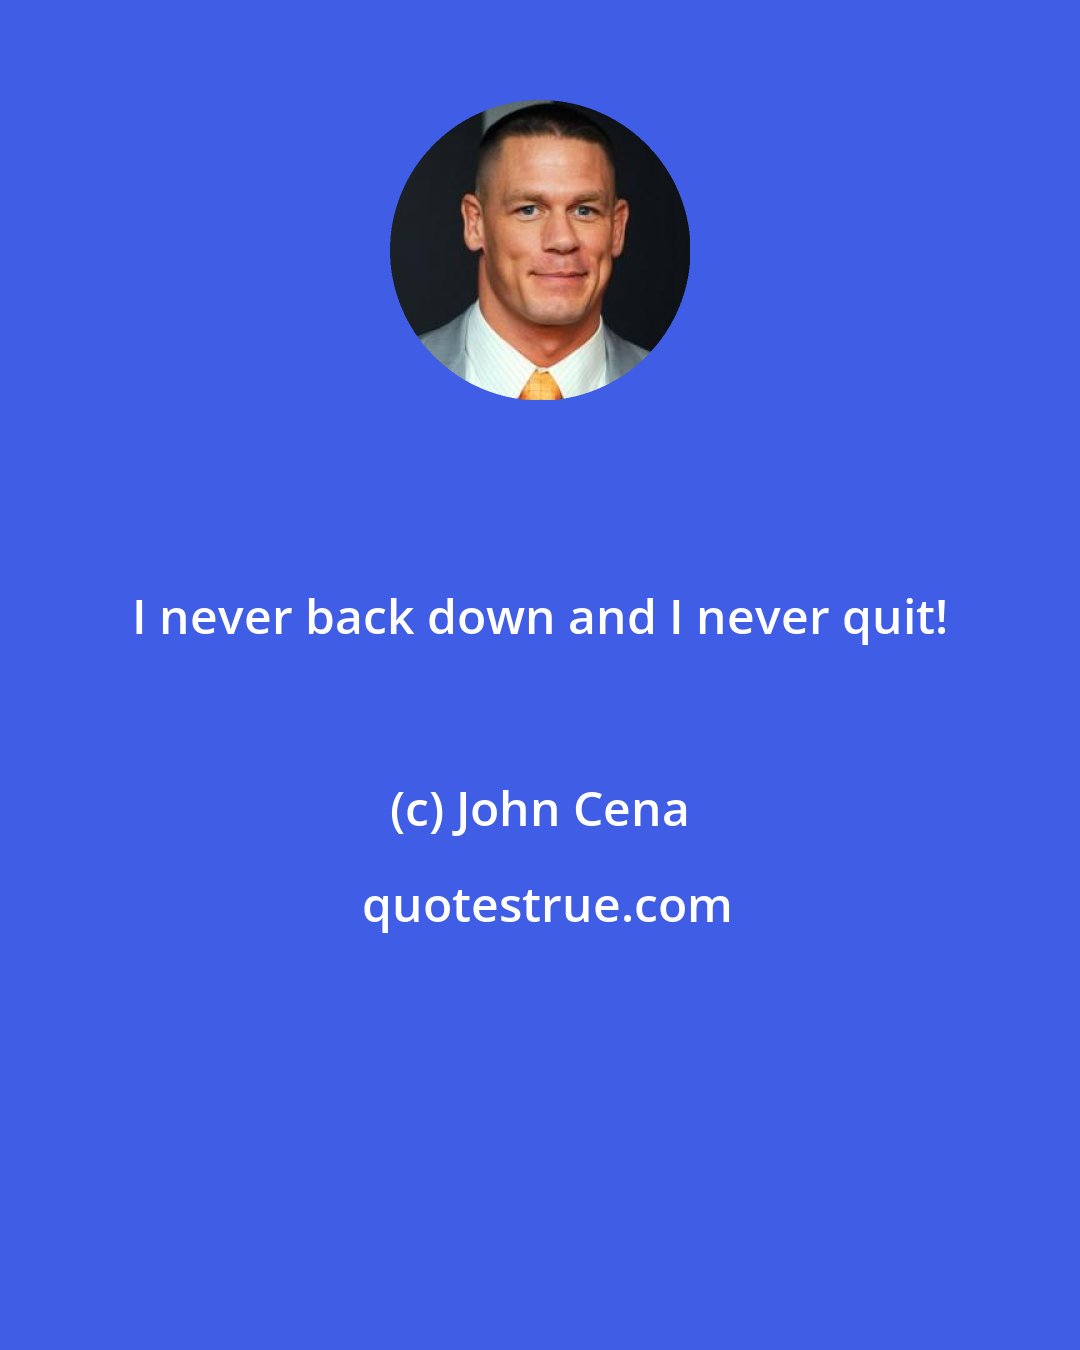 John Cena: I never back down and I never quit!